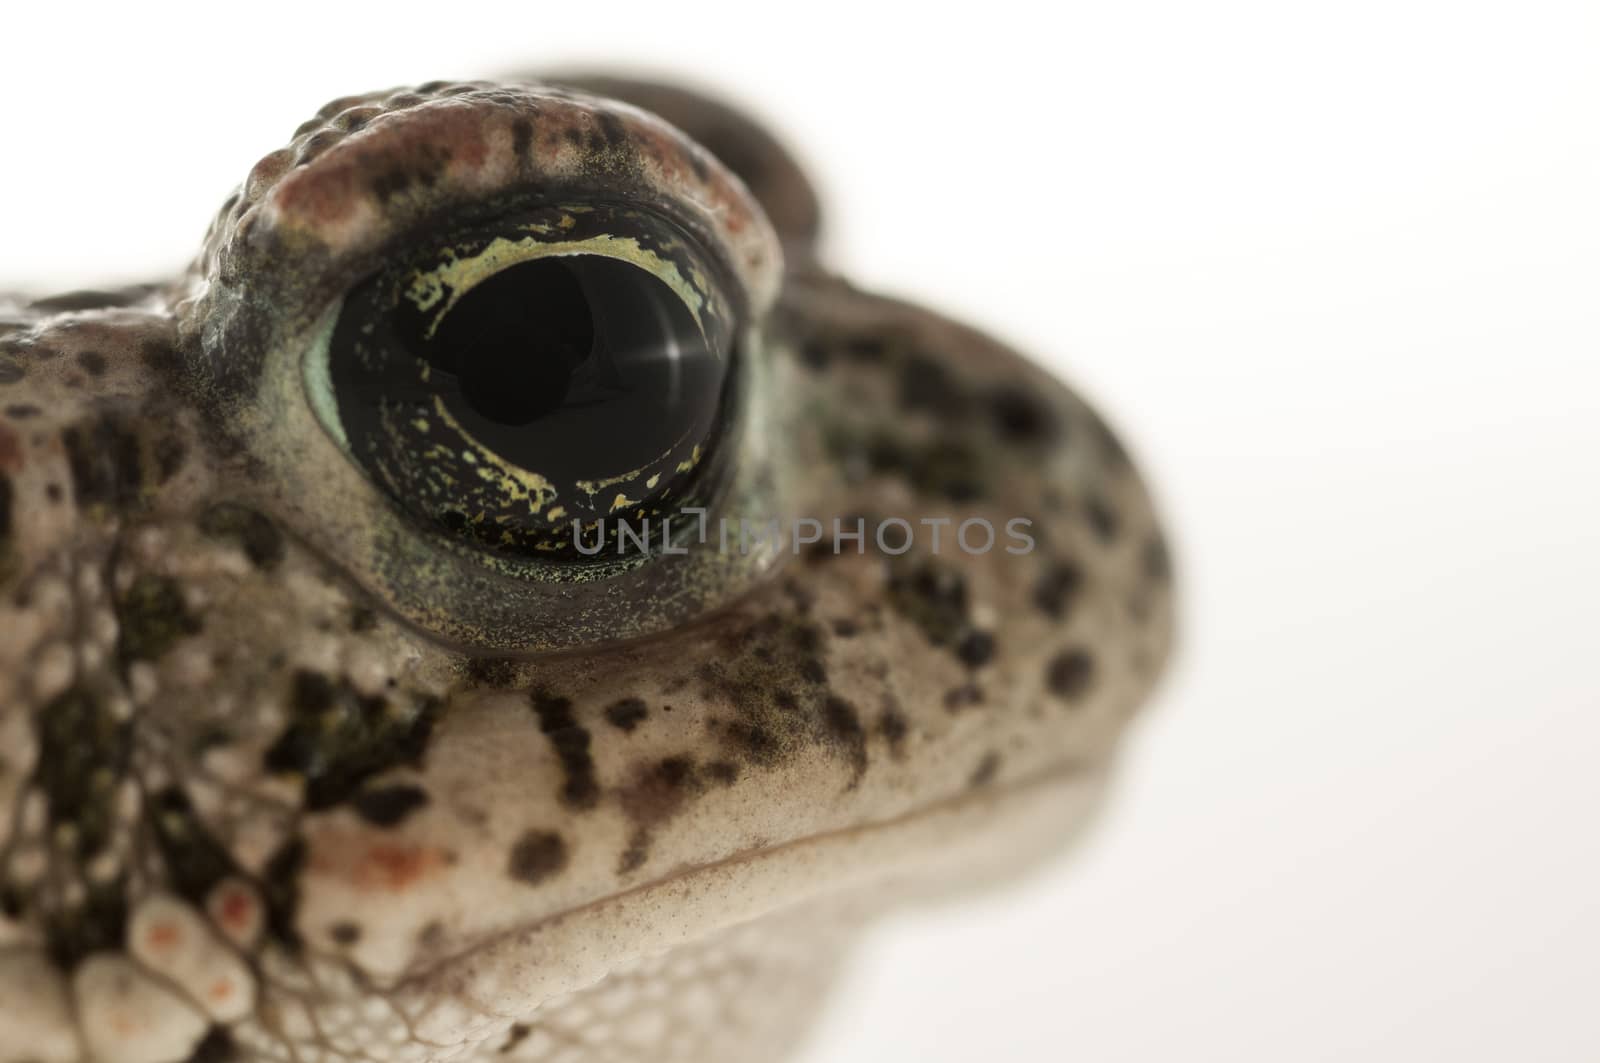 Natterjack toad (Epidalea calamita) with White background, Eye D by jalonsohu@gmail.com